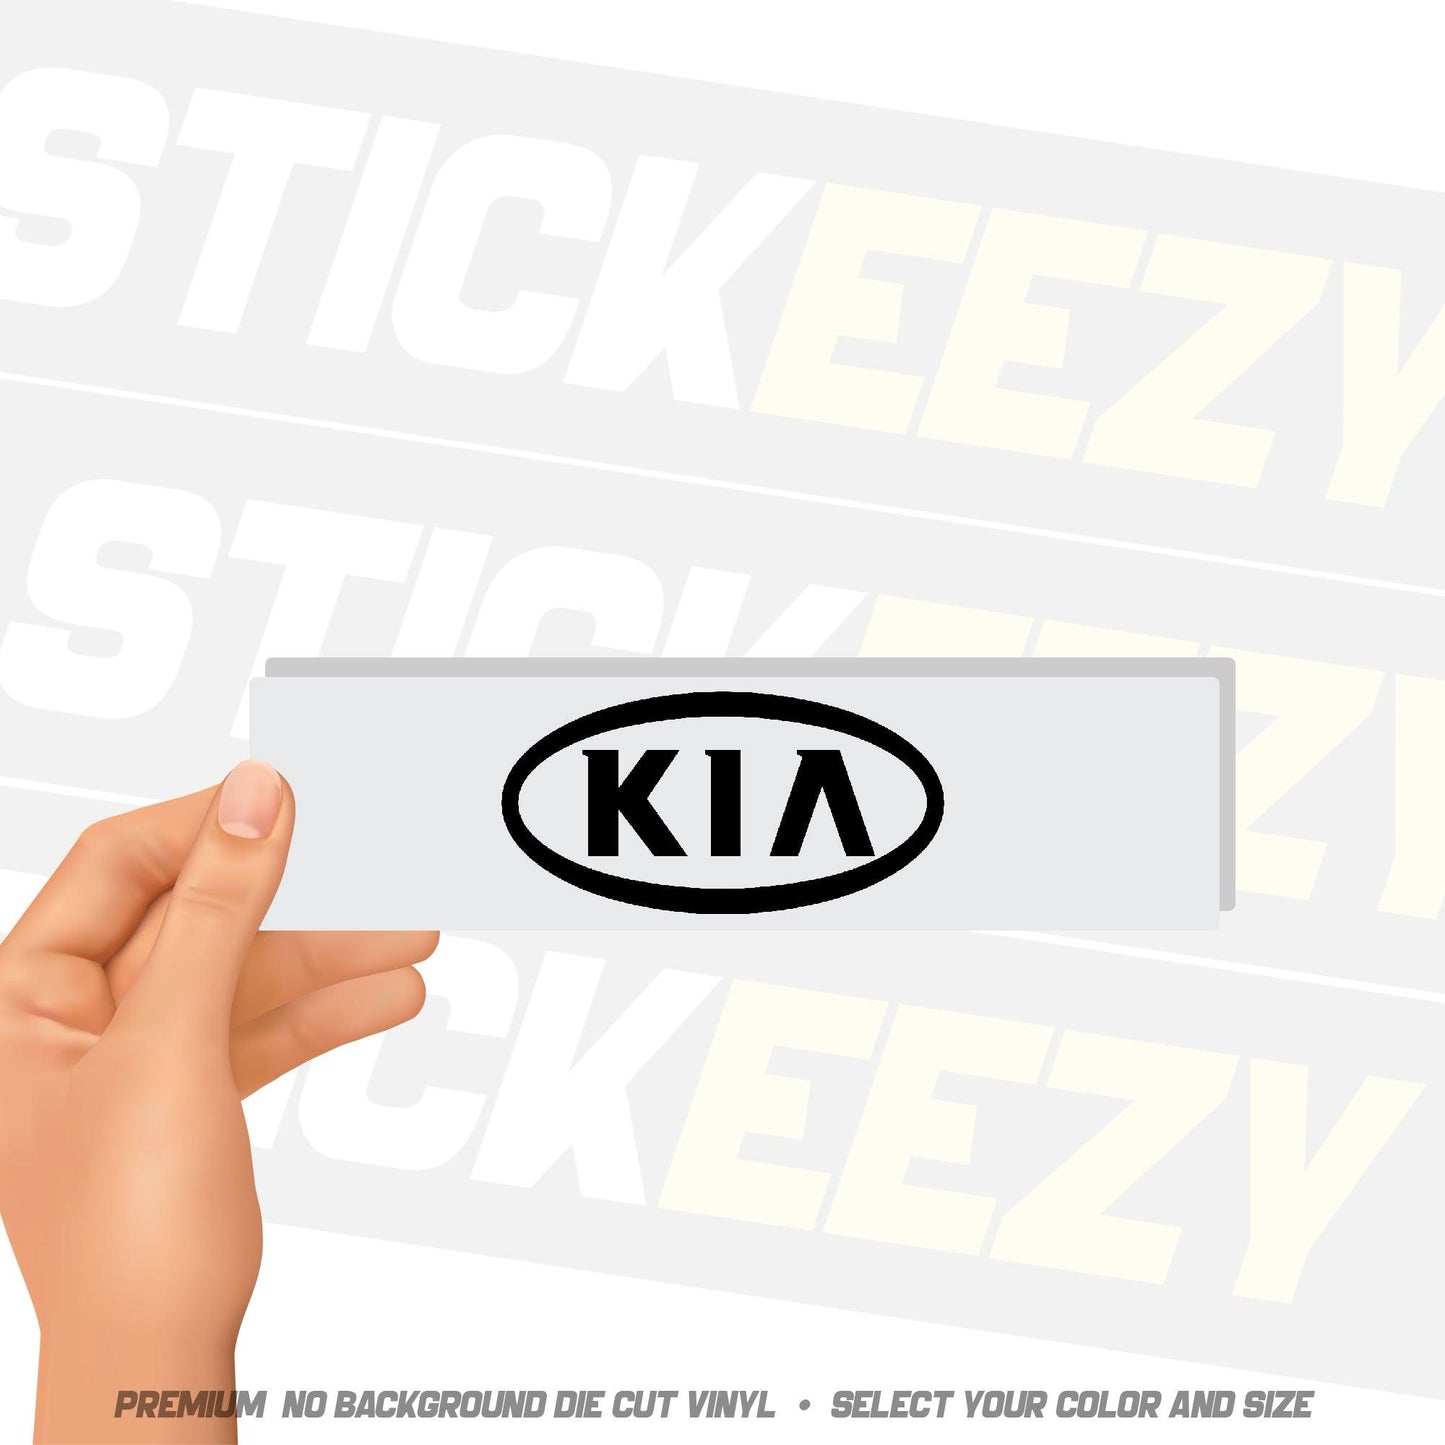 KIA Brake Caliper Decal 2 pcs - stickeezy